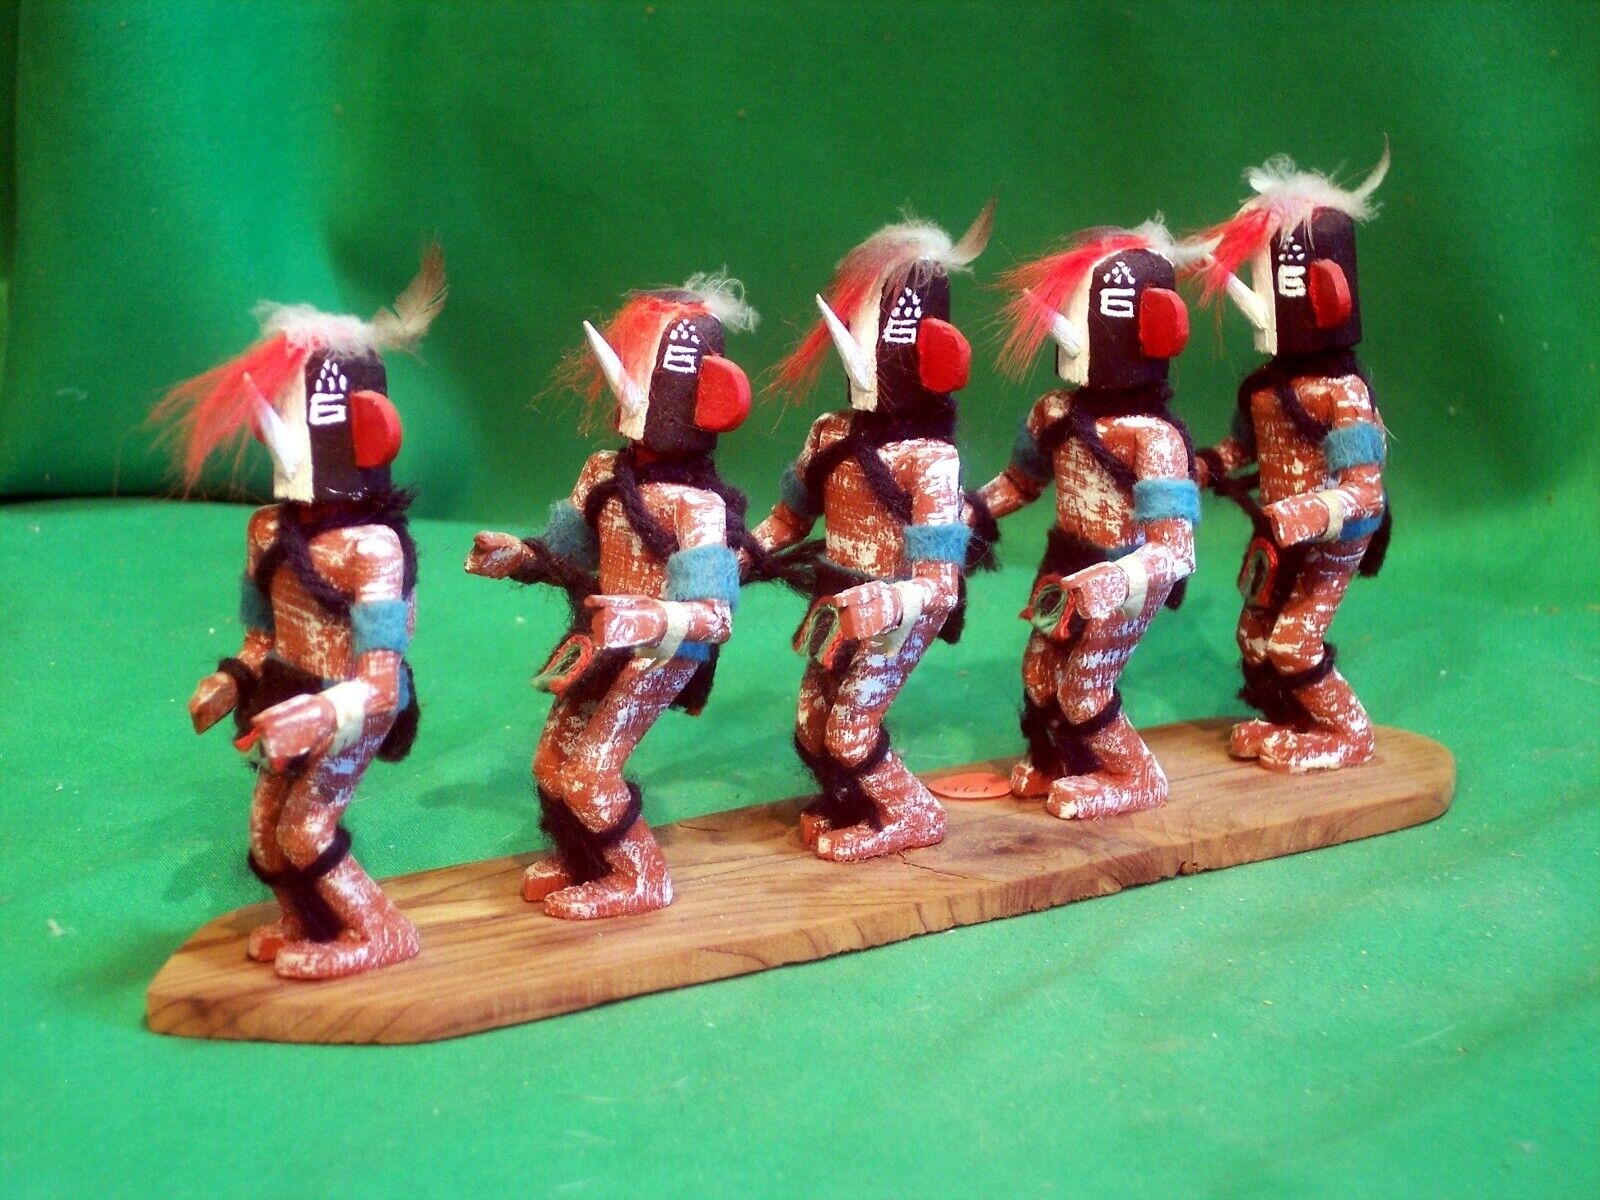 Hopi Kachina Doll - Kokopelli Procession by Gordon Crook - A Small Masterpiece